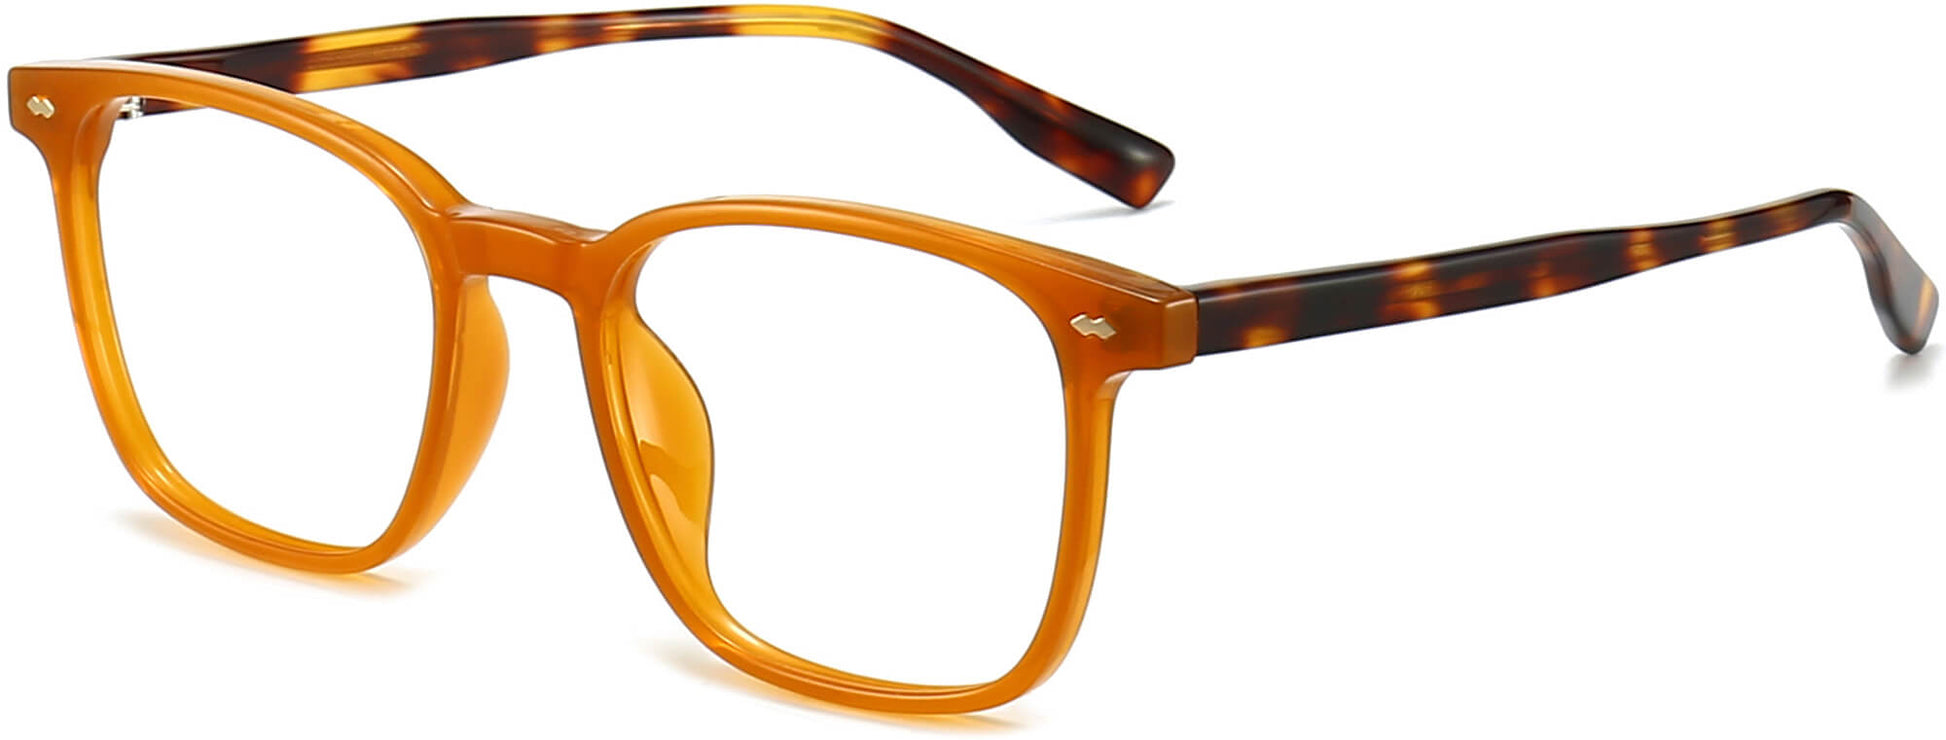 Huxley Square Orange Eyeglasses from ANRRI, angle view